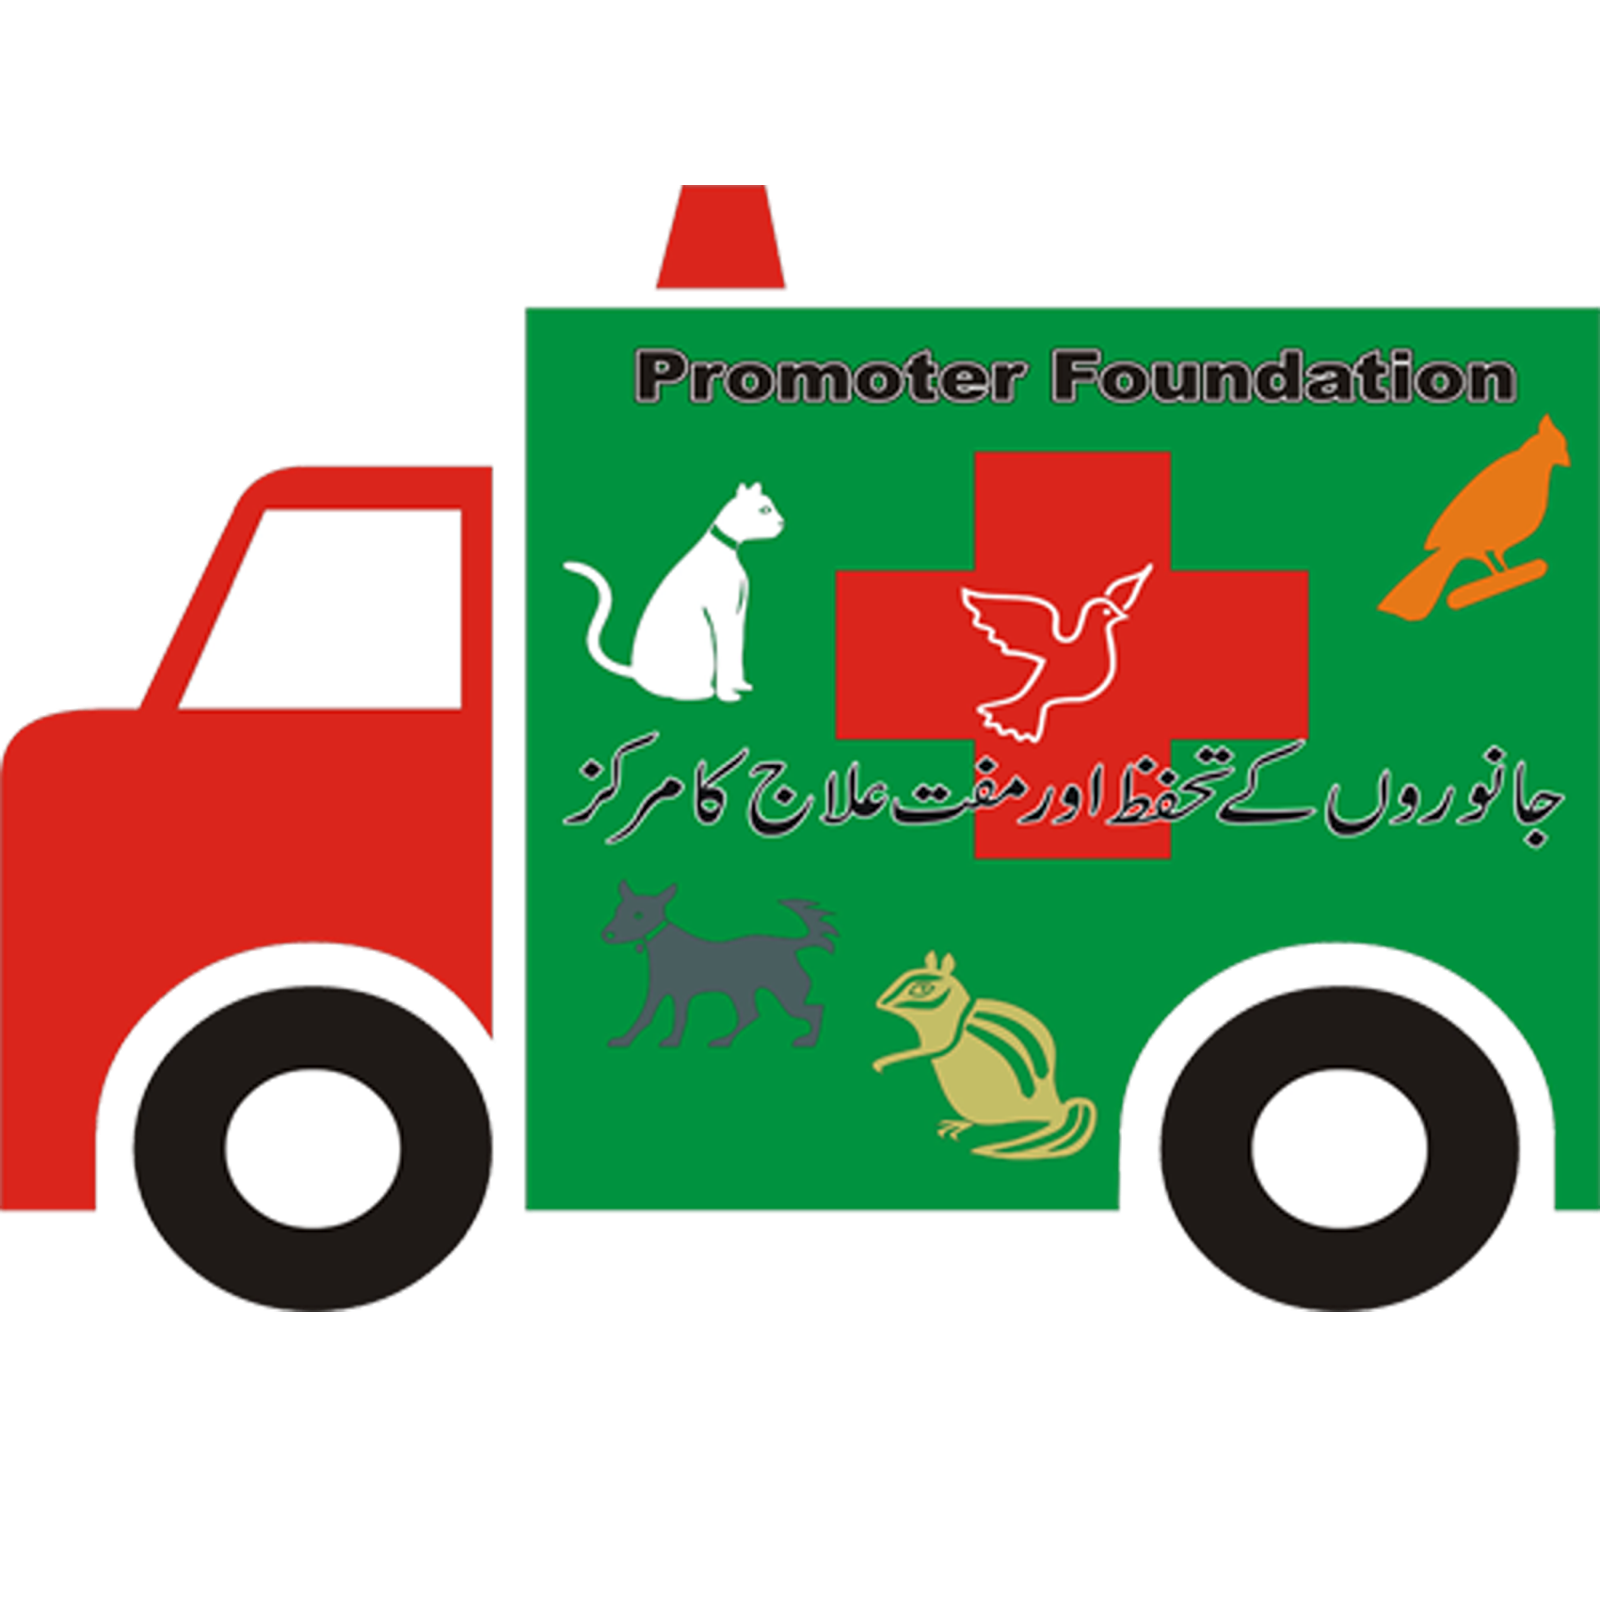 Promoter foundation